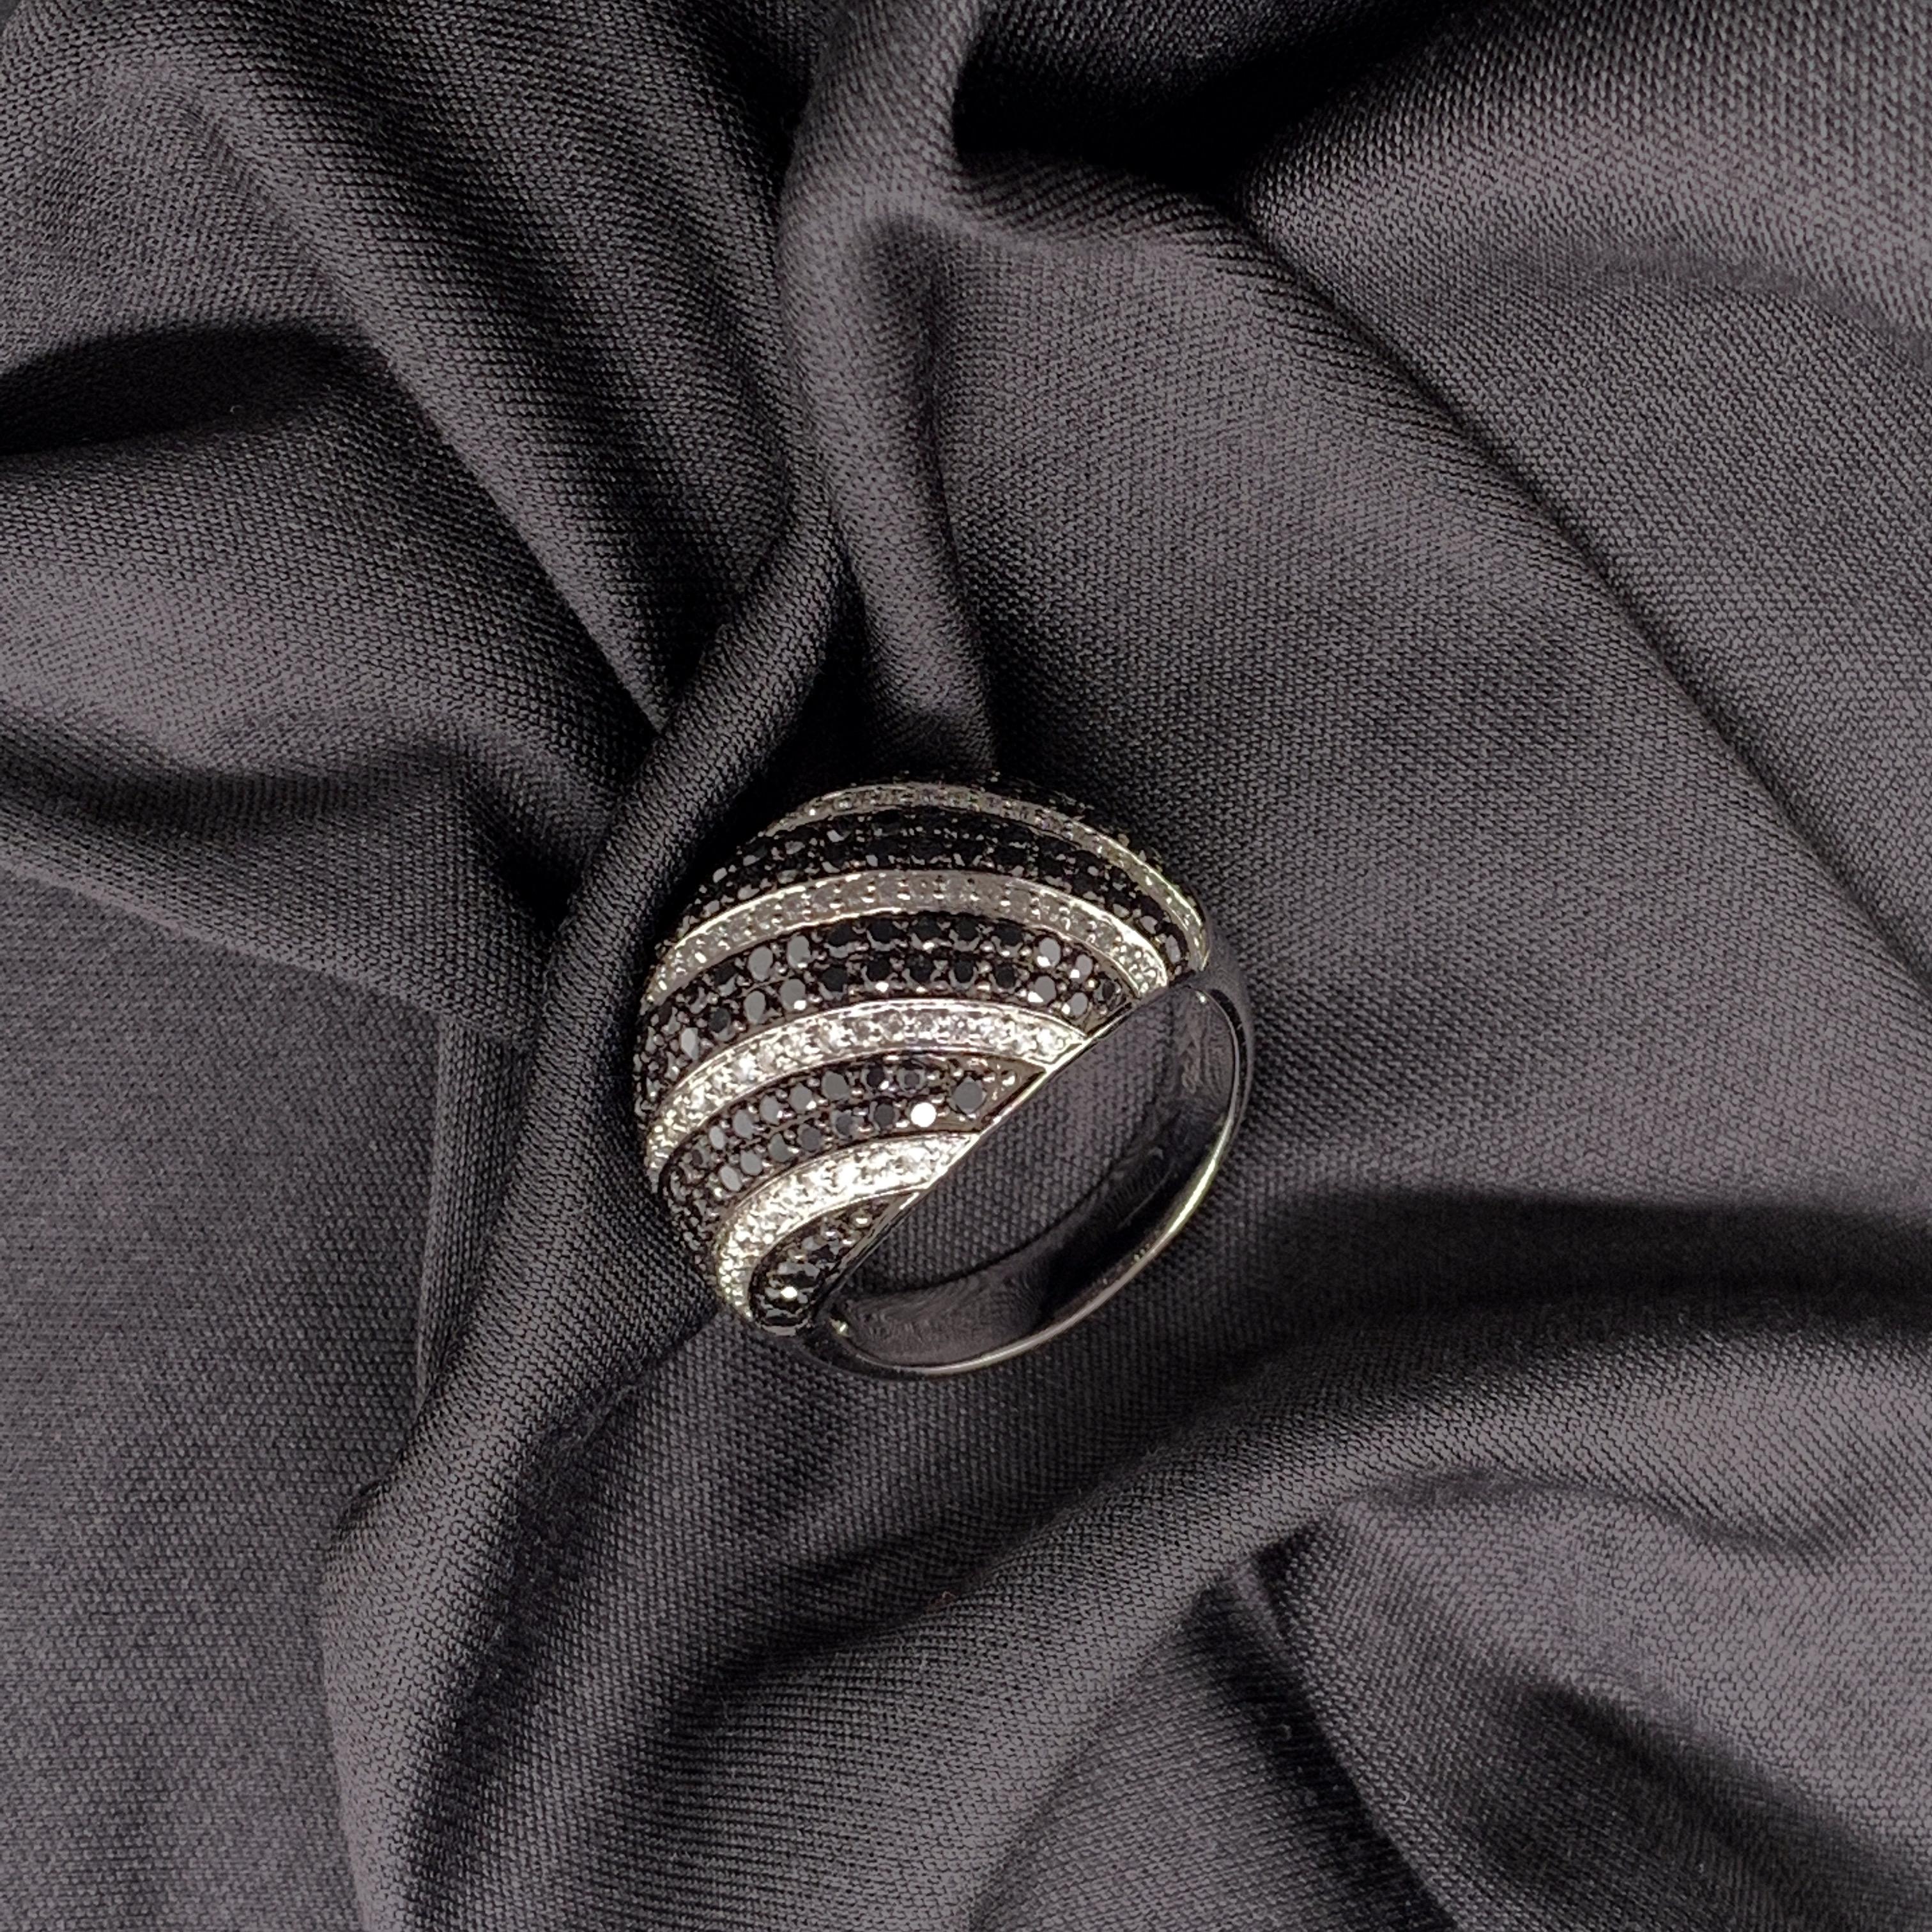 Contemporary 1.36 Carat Black Diamond Cocktail Ring